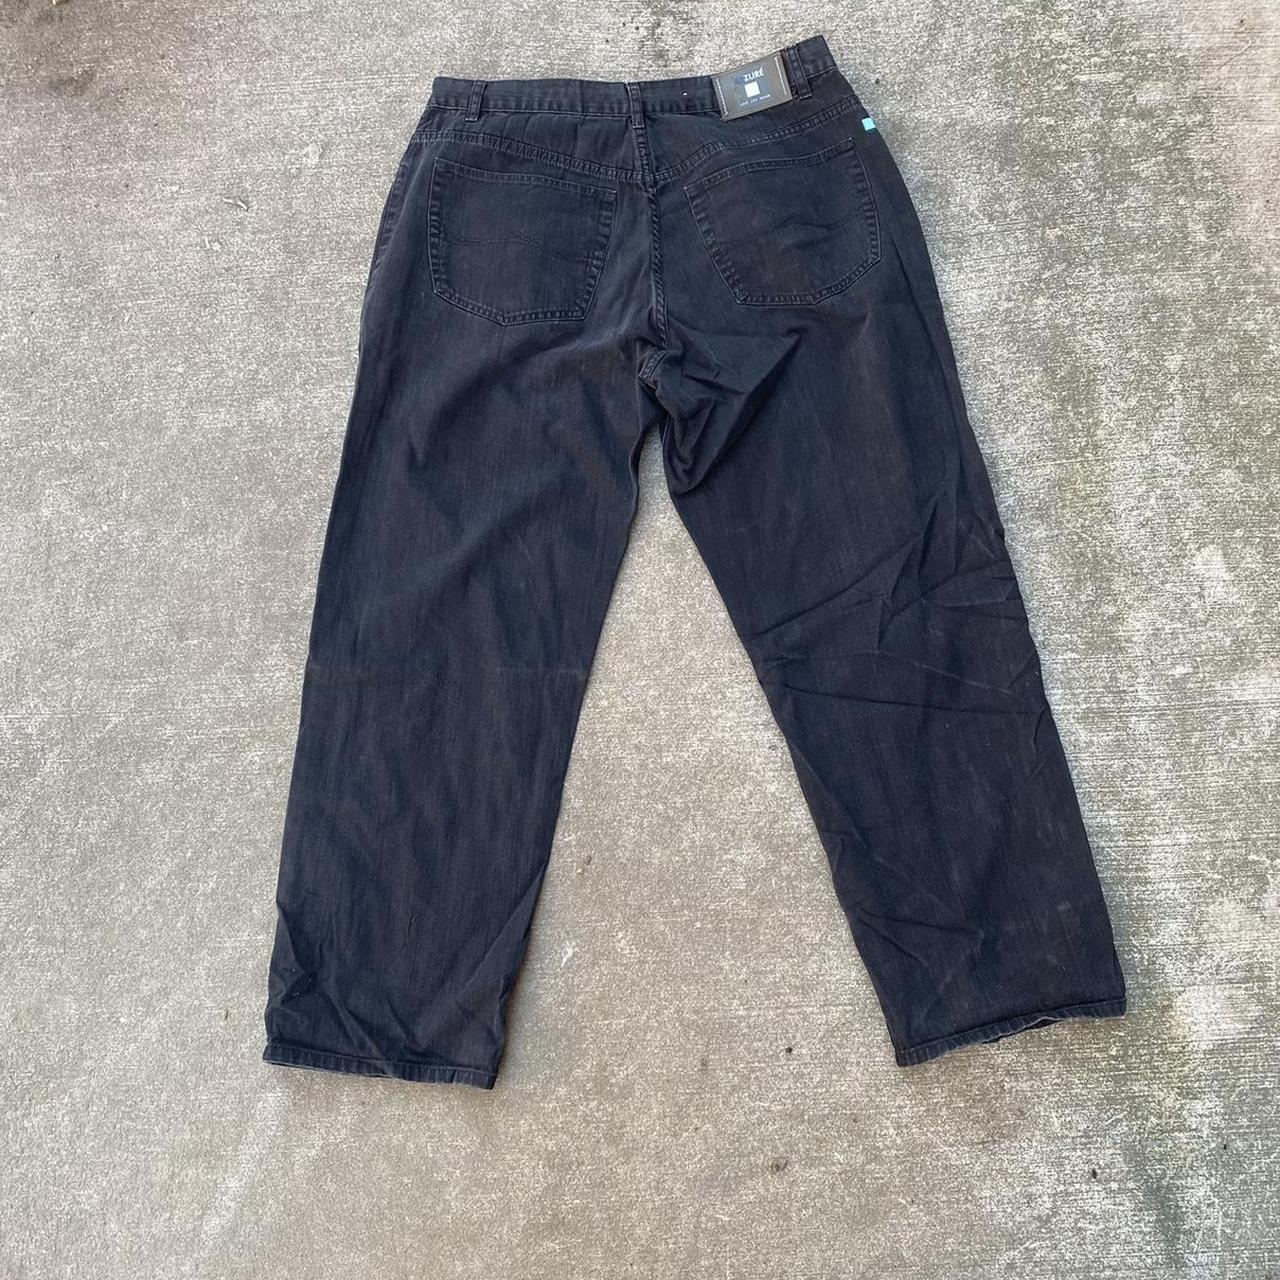 baggy black jeans small waist 36x30 #baggyjeans... - Depop